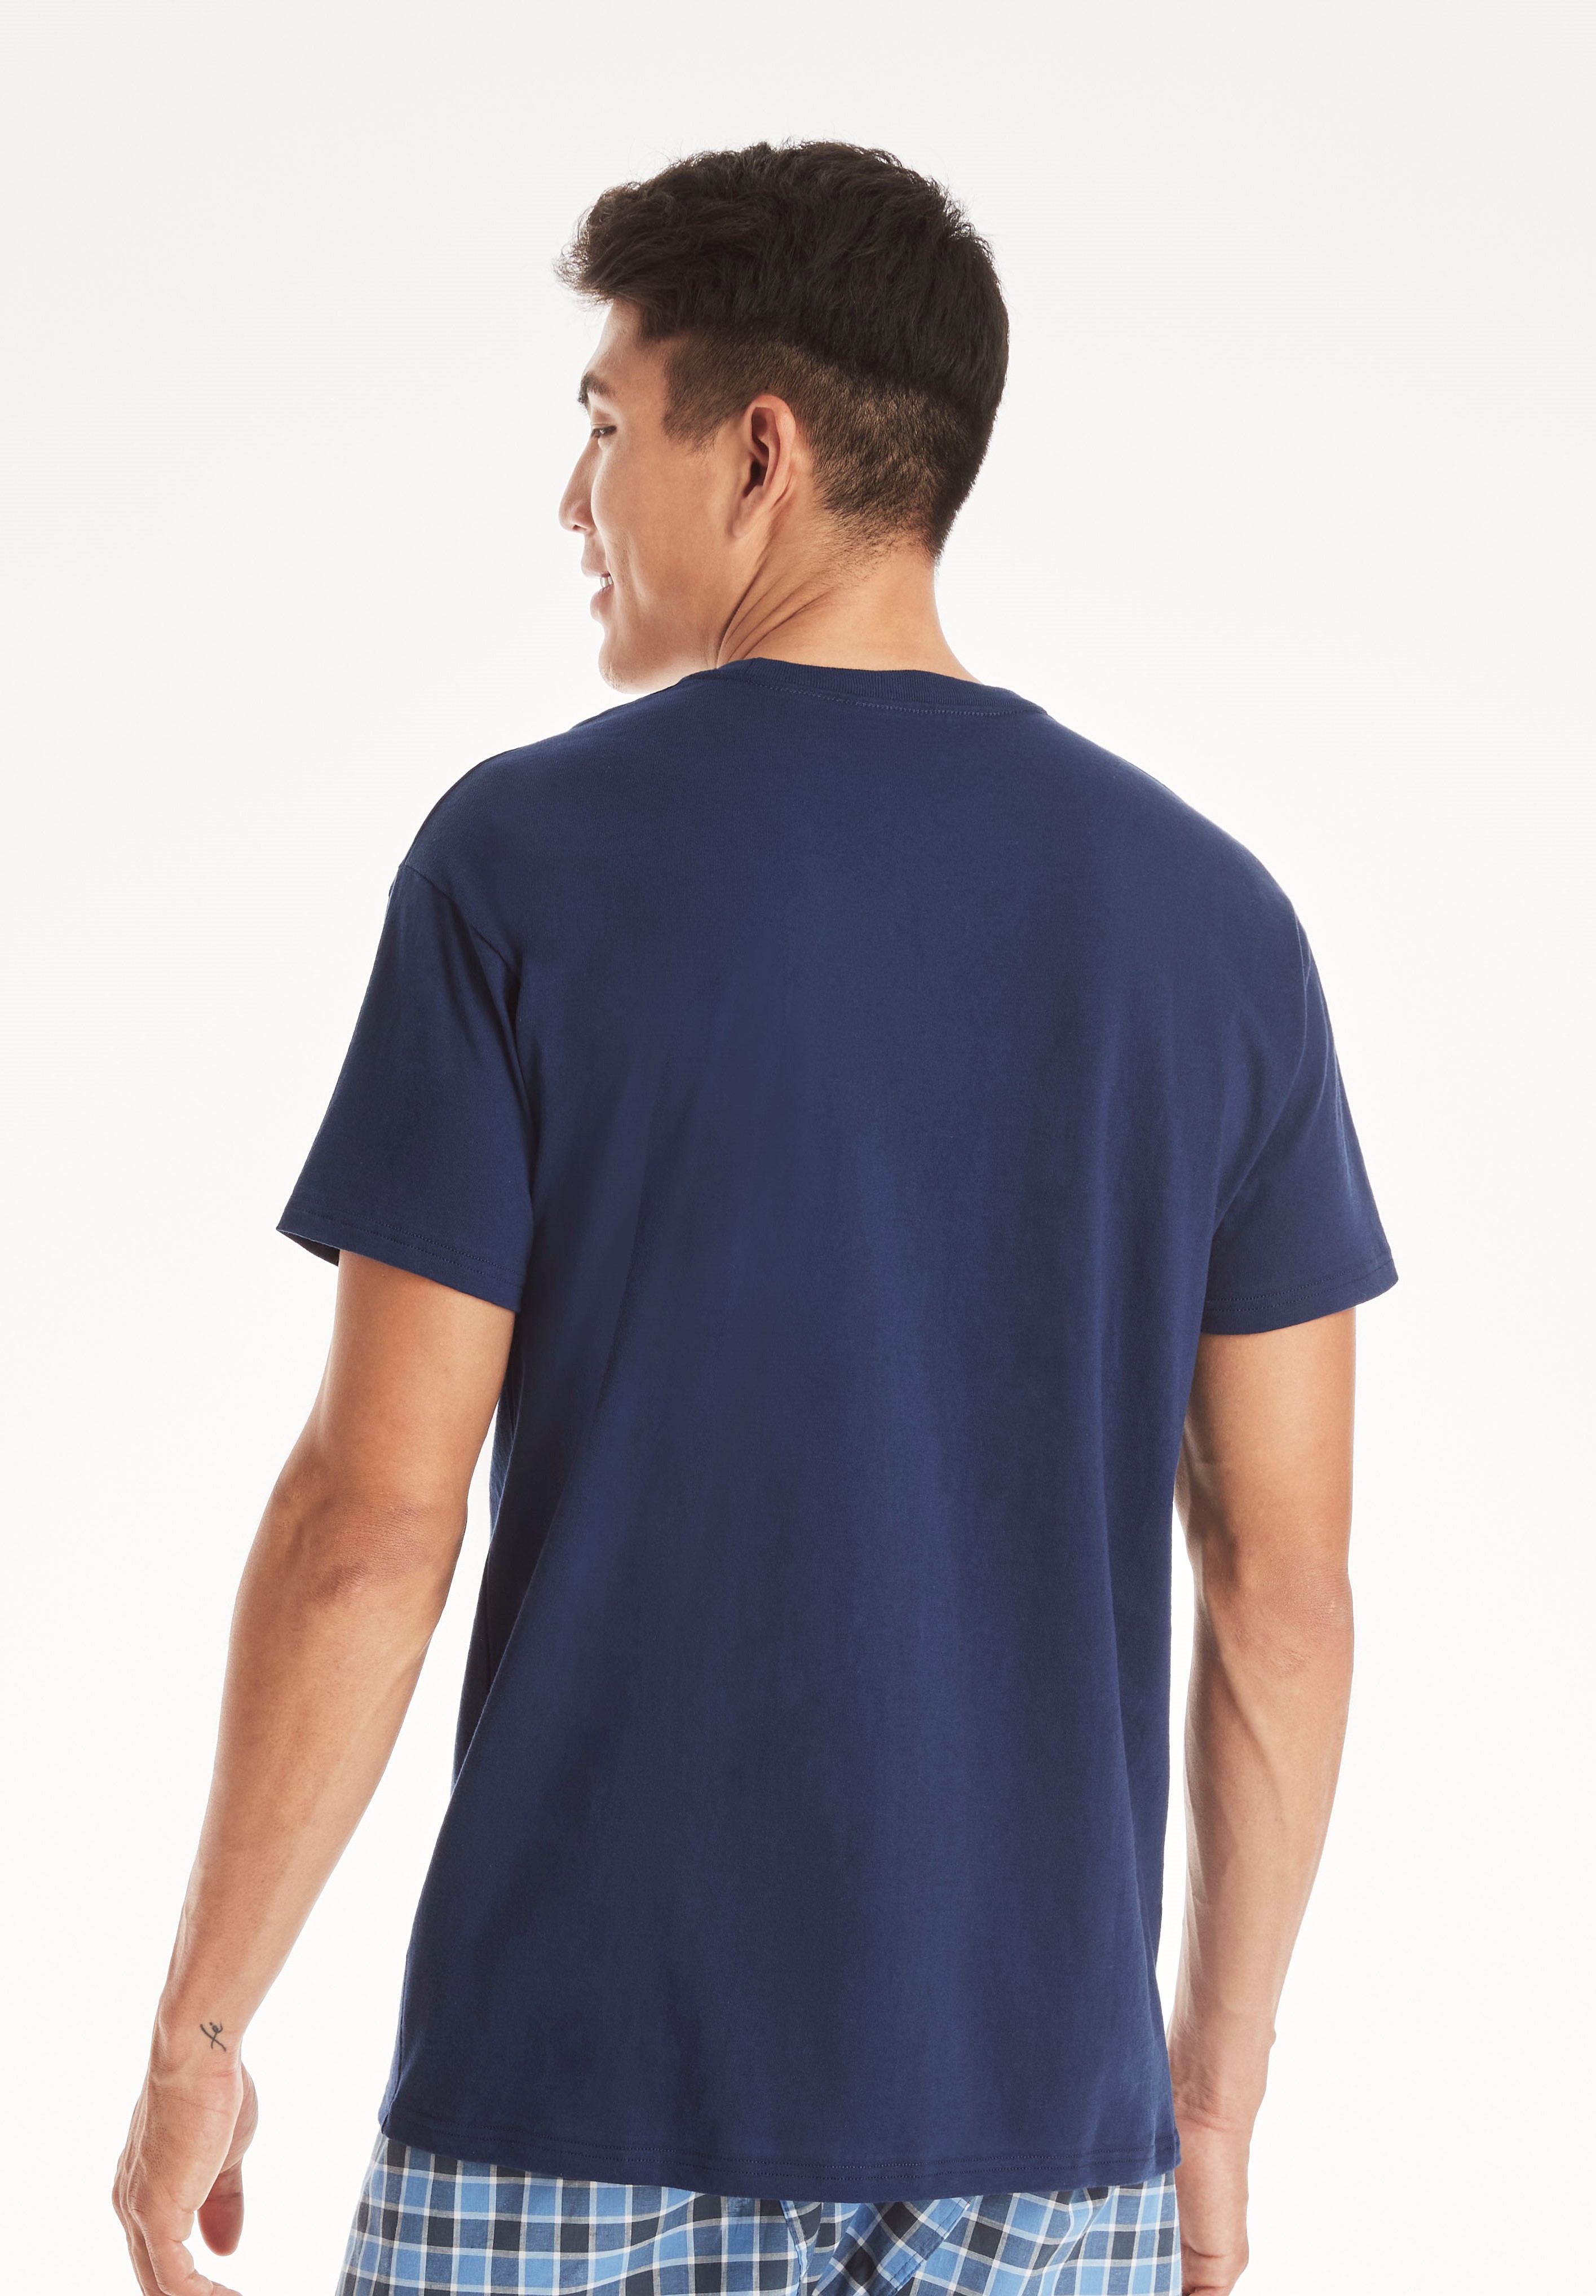 Hanes Men's Value Pack Assorted Pocket T-Shirt Undershirts, 6 Pack - image 3 of 7